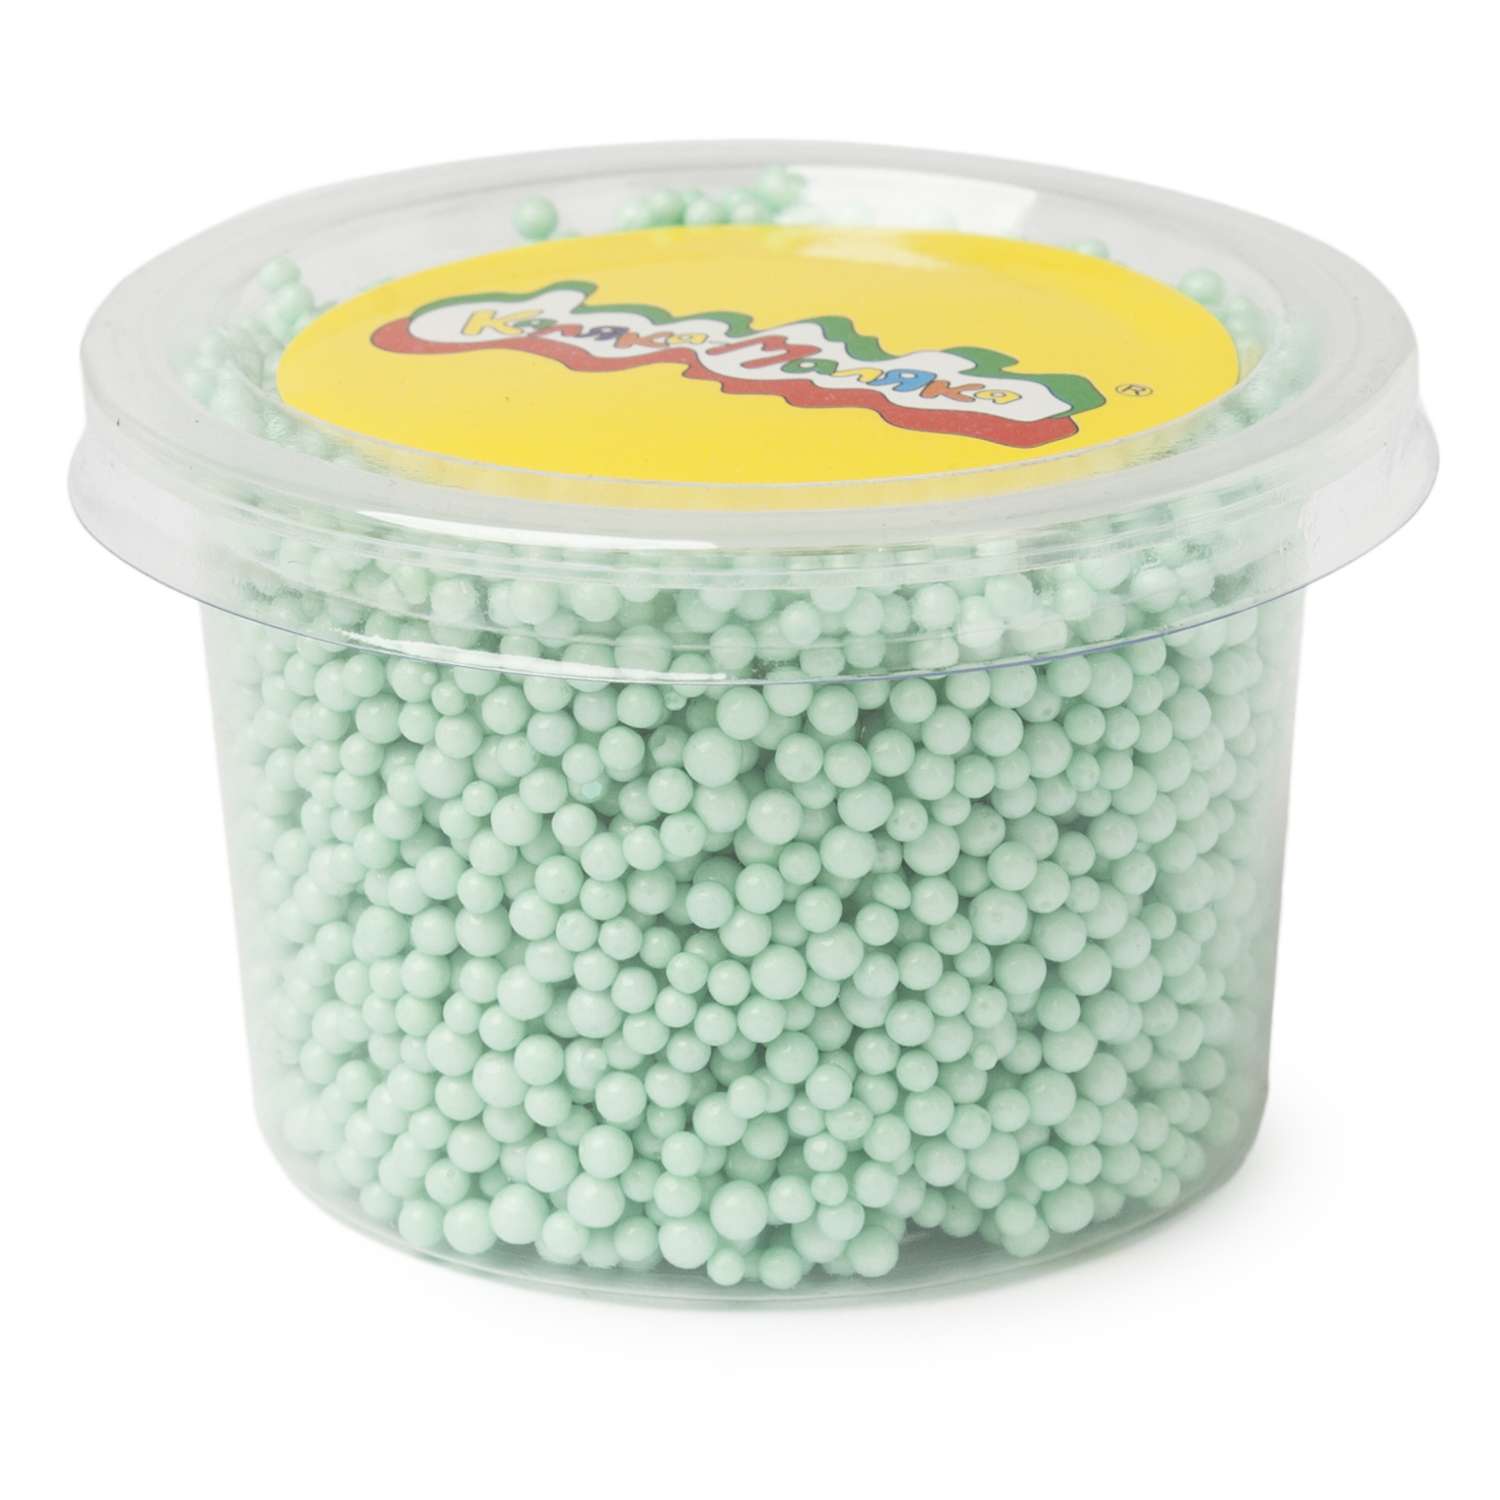 Пластилин в шариках Каляка-Маляка крупное зерно 6 цветов 12 грамм - фото 2